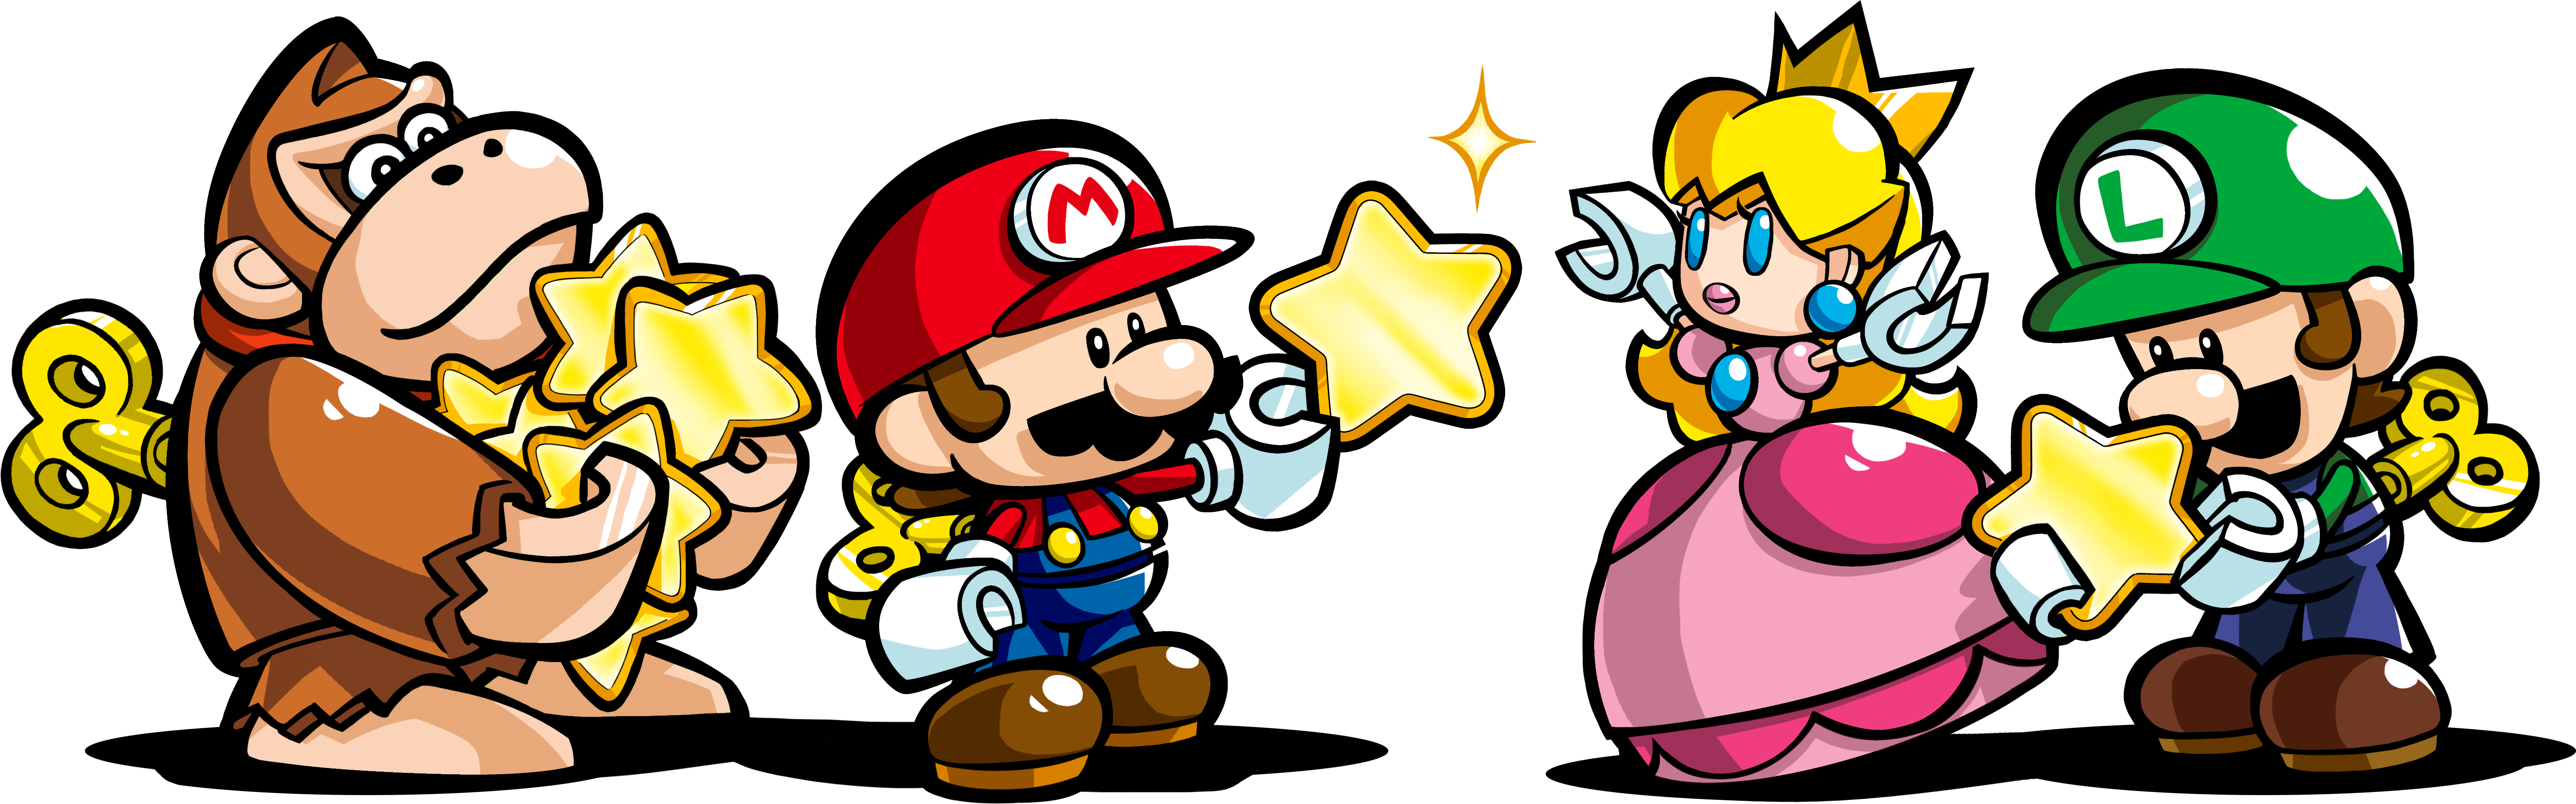 Artwork from Mario vs. Donkey Kong: Tipping Stars.